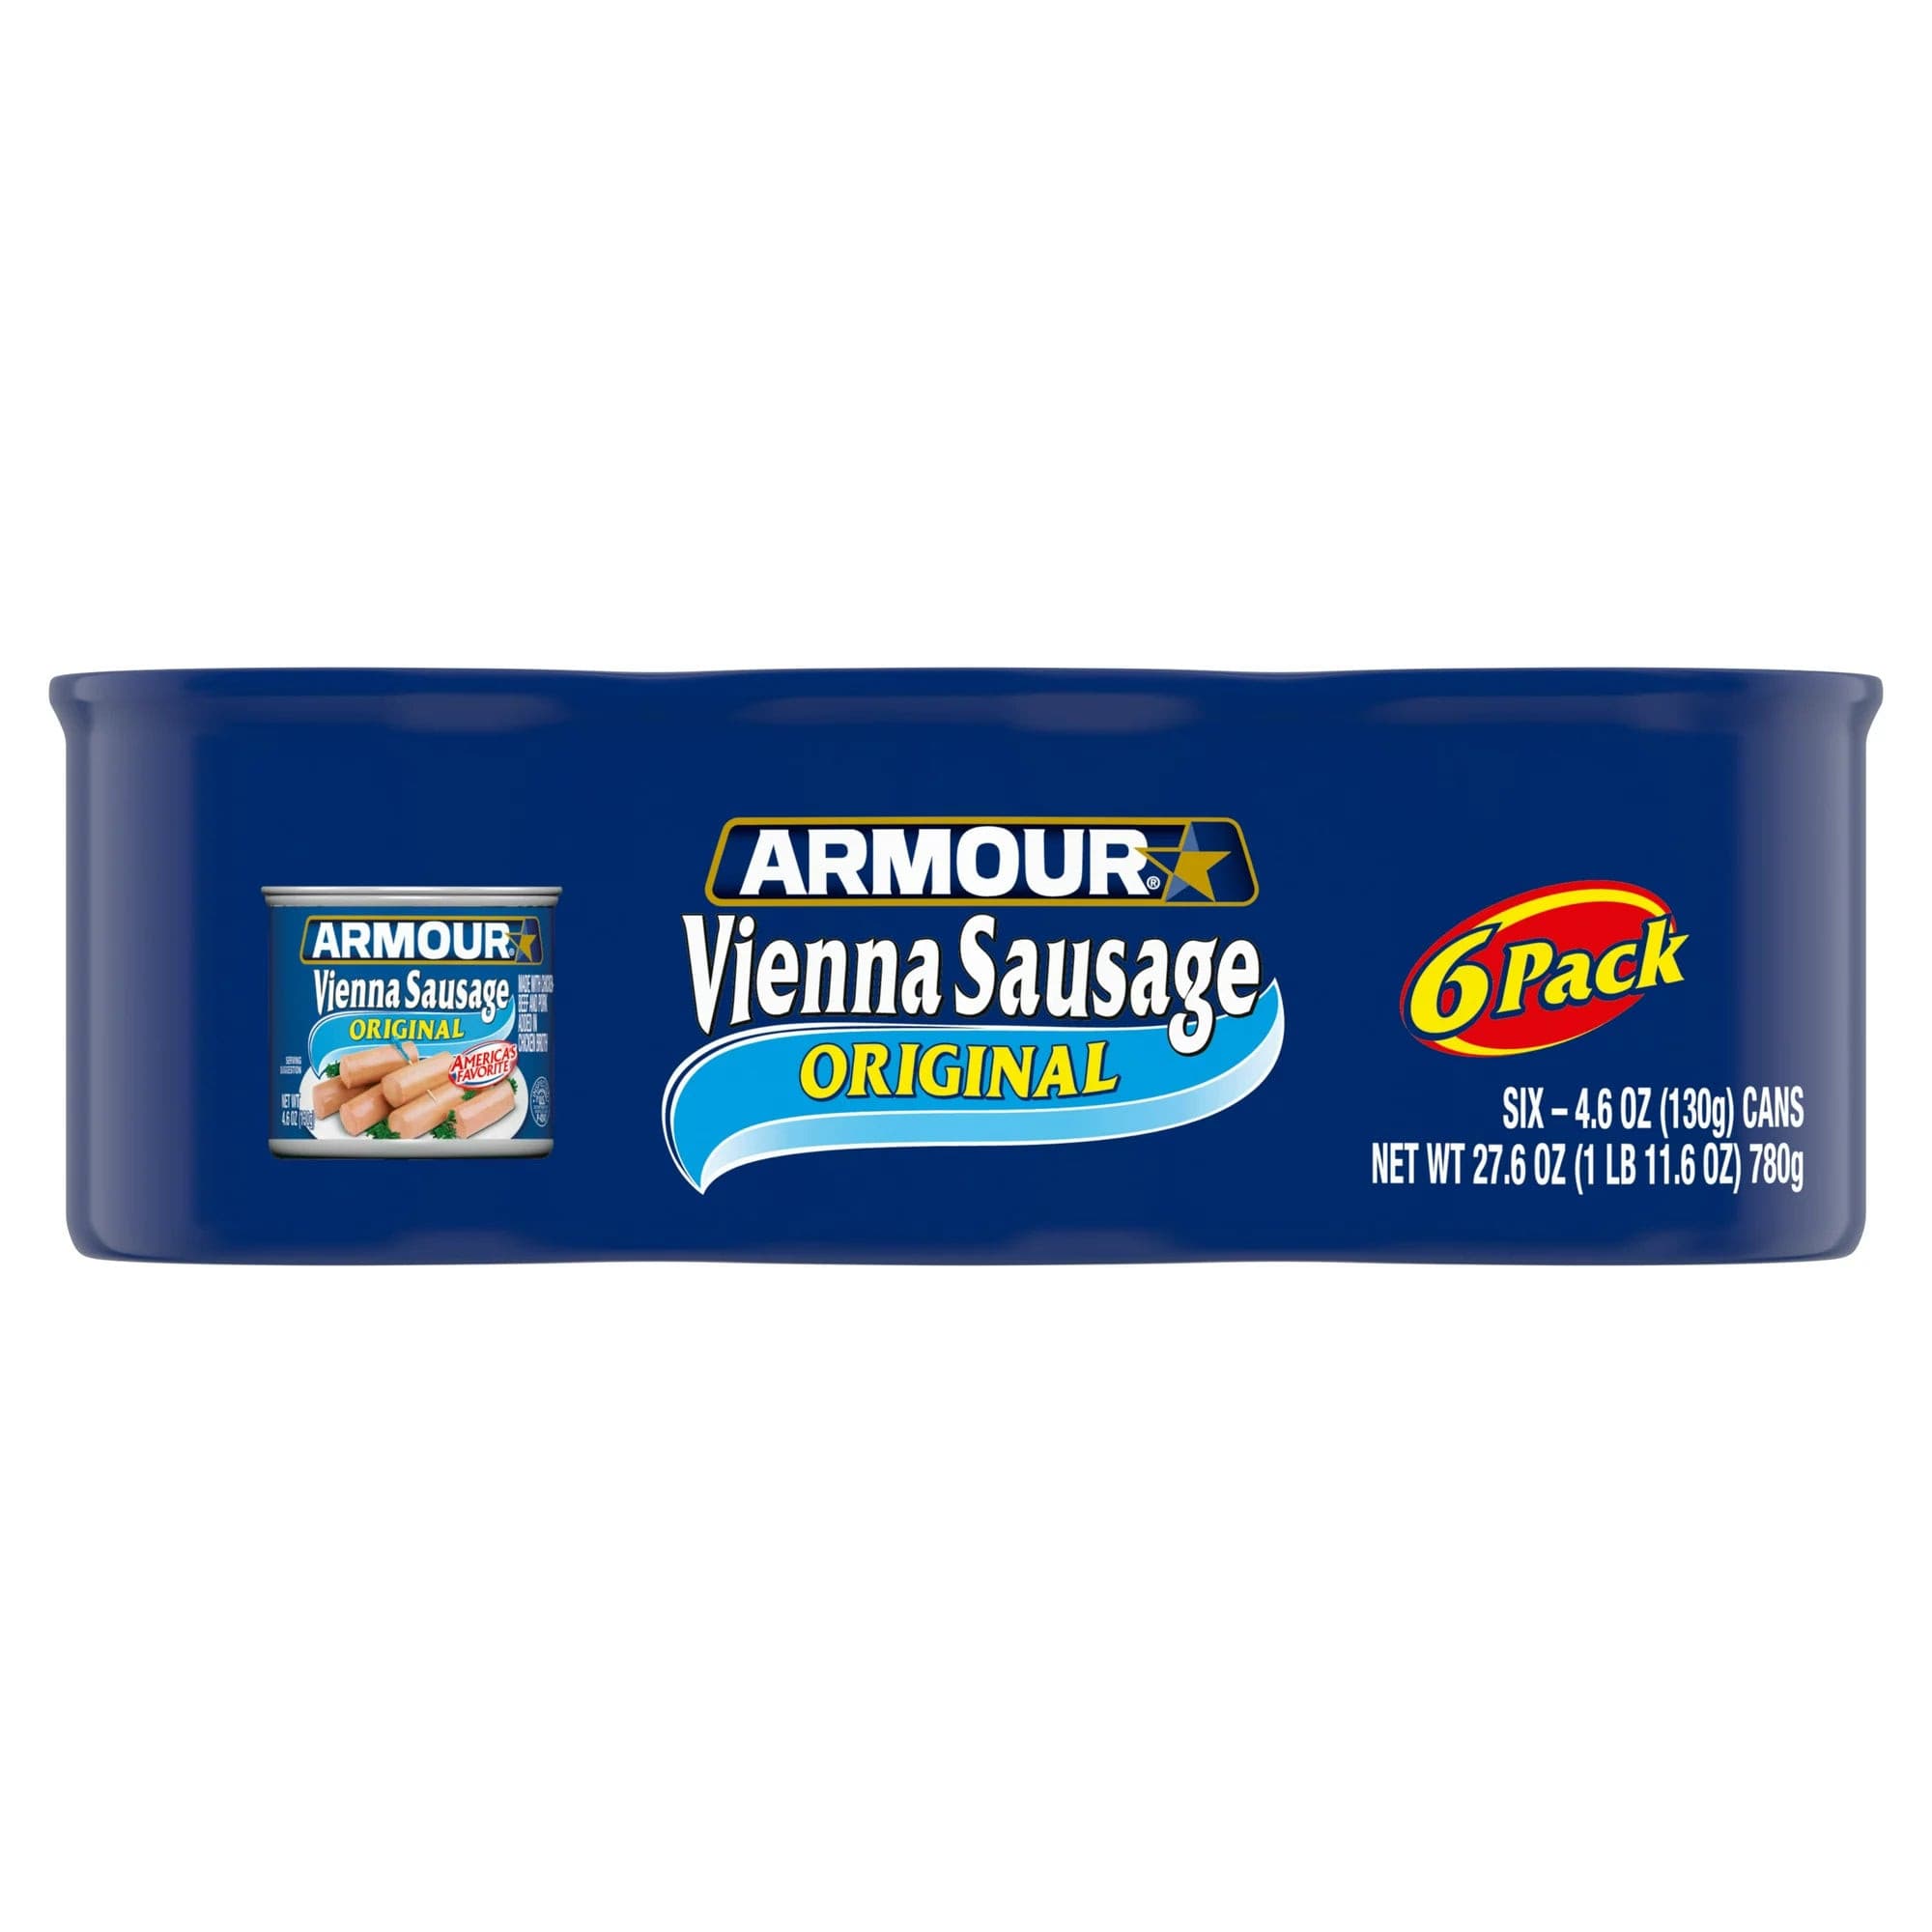 Armour Star Vienna Sausage, Original Flavor, Canned Sausage, 4.6 OZ (Pack of 6).